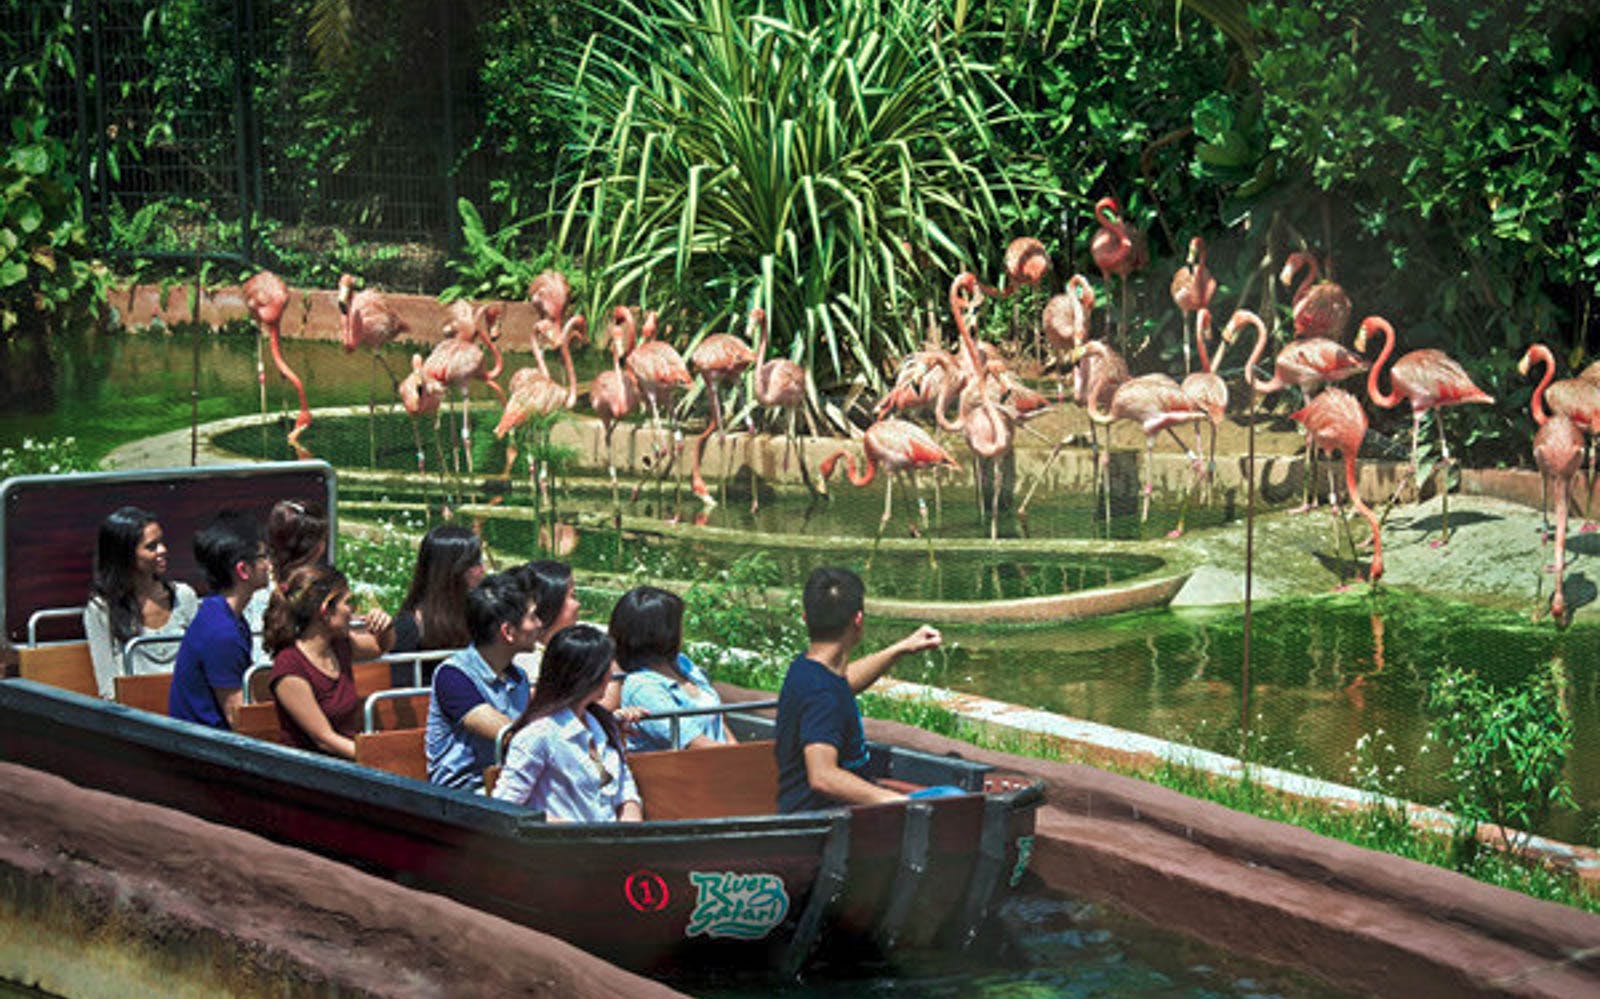 safari world bangkok activities